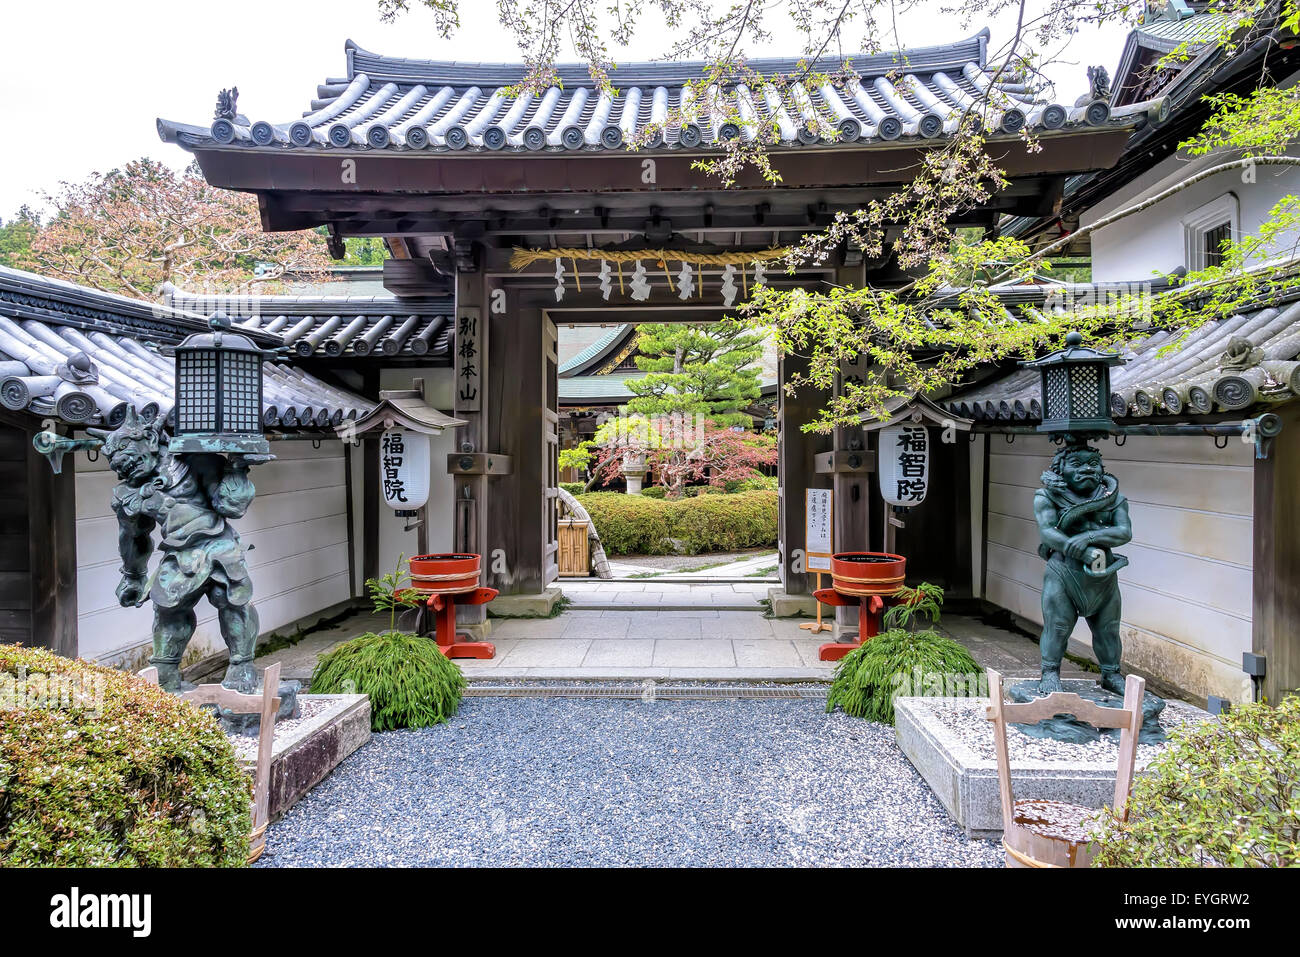 Entrance to Fukuchi-in temple lodging in Koyasan, Japan Stock Photo